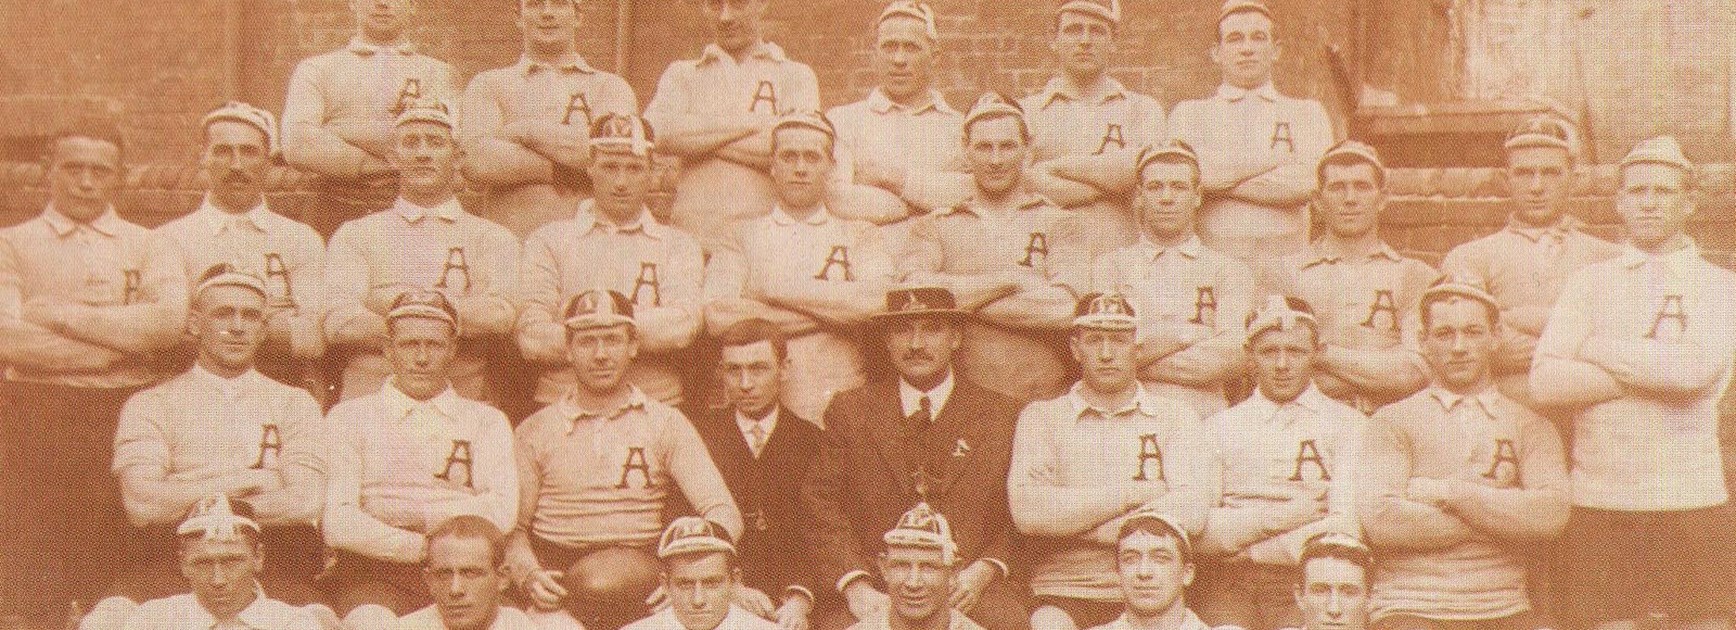 Kangaroos 1911 team photo.